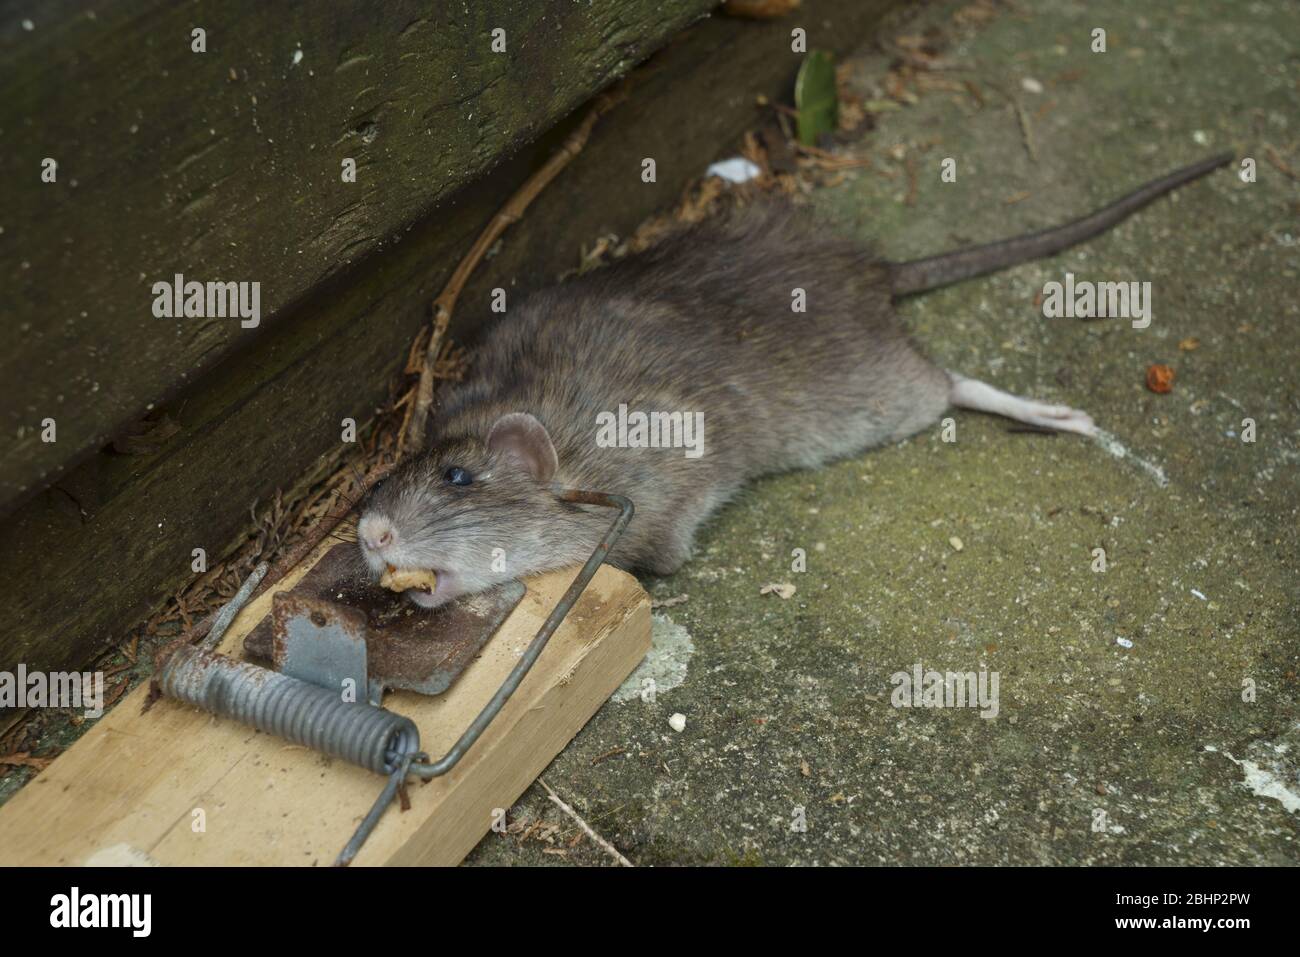 https://c8.alamy.com/comp/2BHP2PW/a-dead-brown-rat-rattus-norvegicus-caught-in-a-trap-using-peanut-butter-as-bait-2BHP2PW.jpg